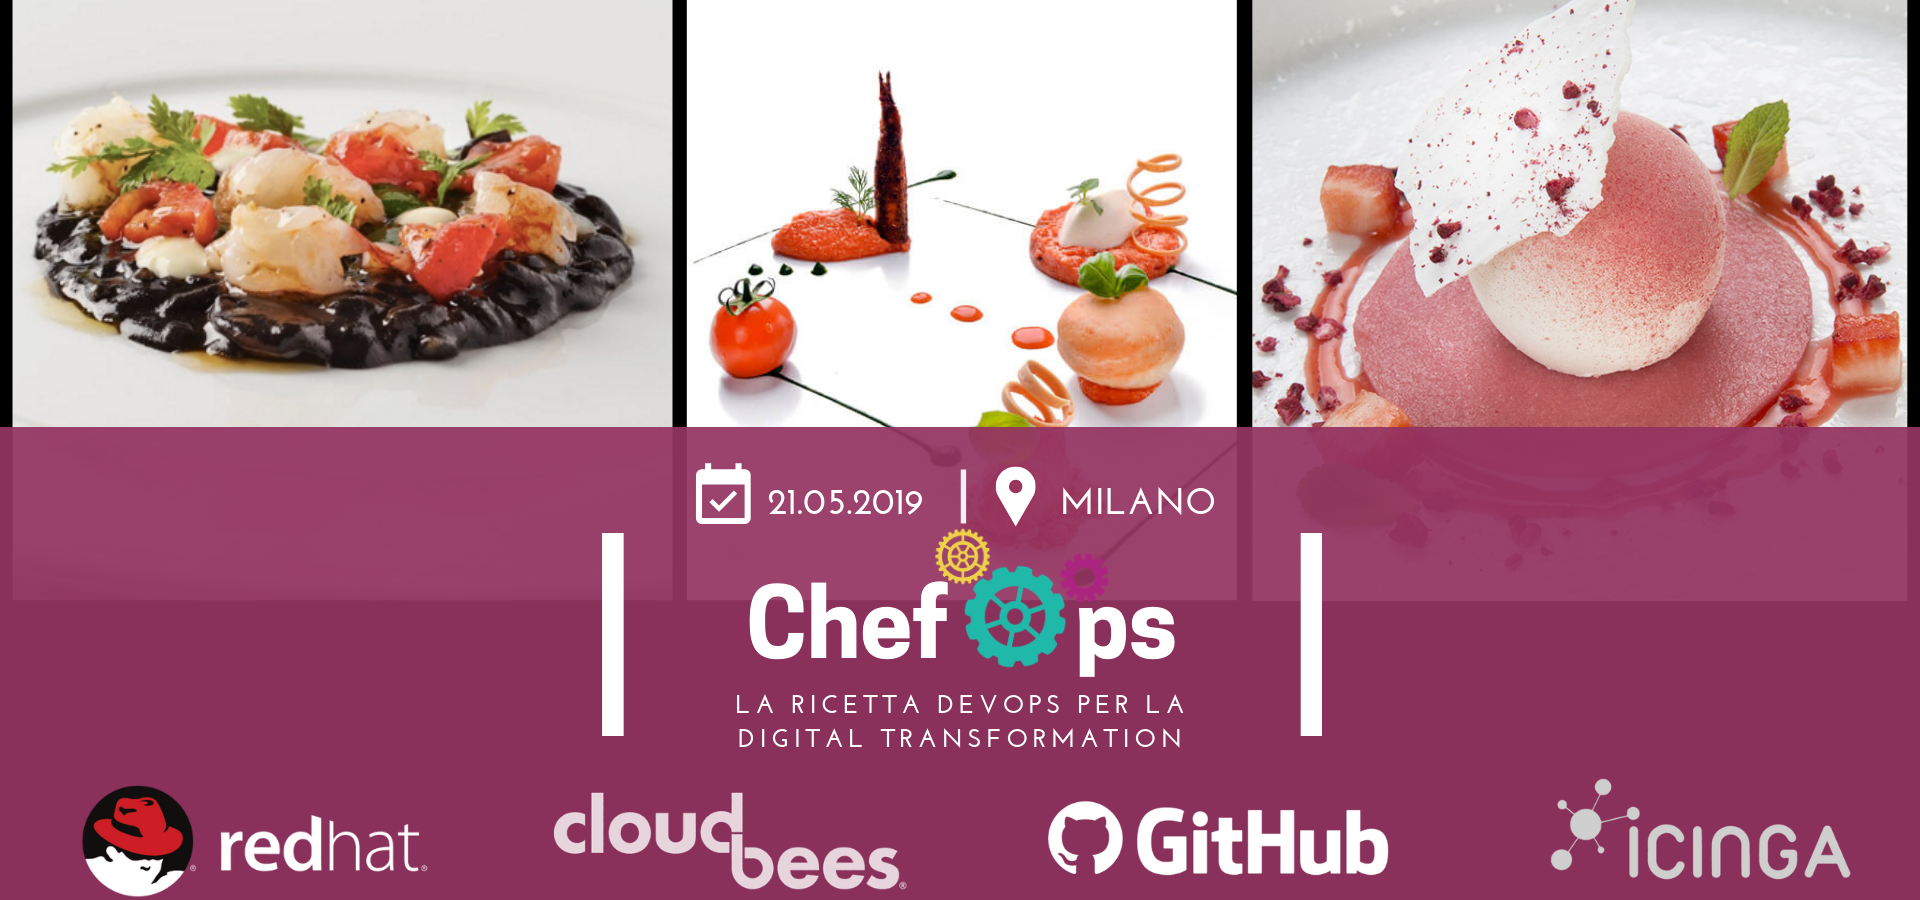 ChefOps Milano DEM (2)